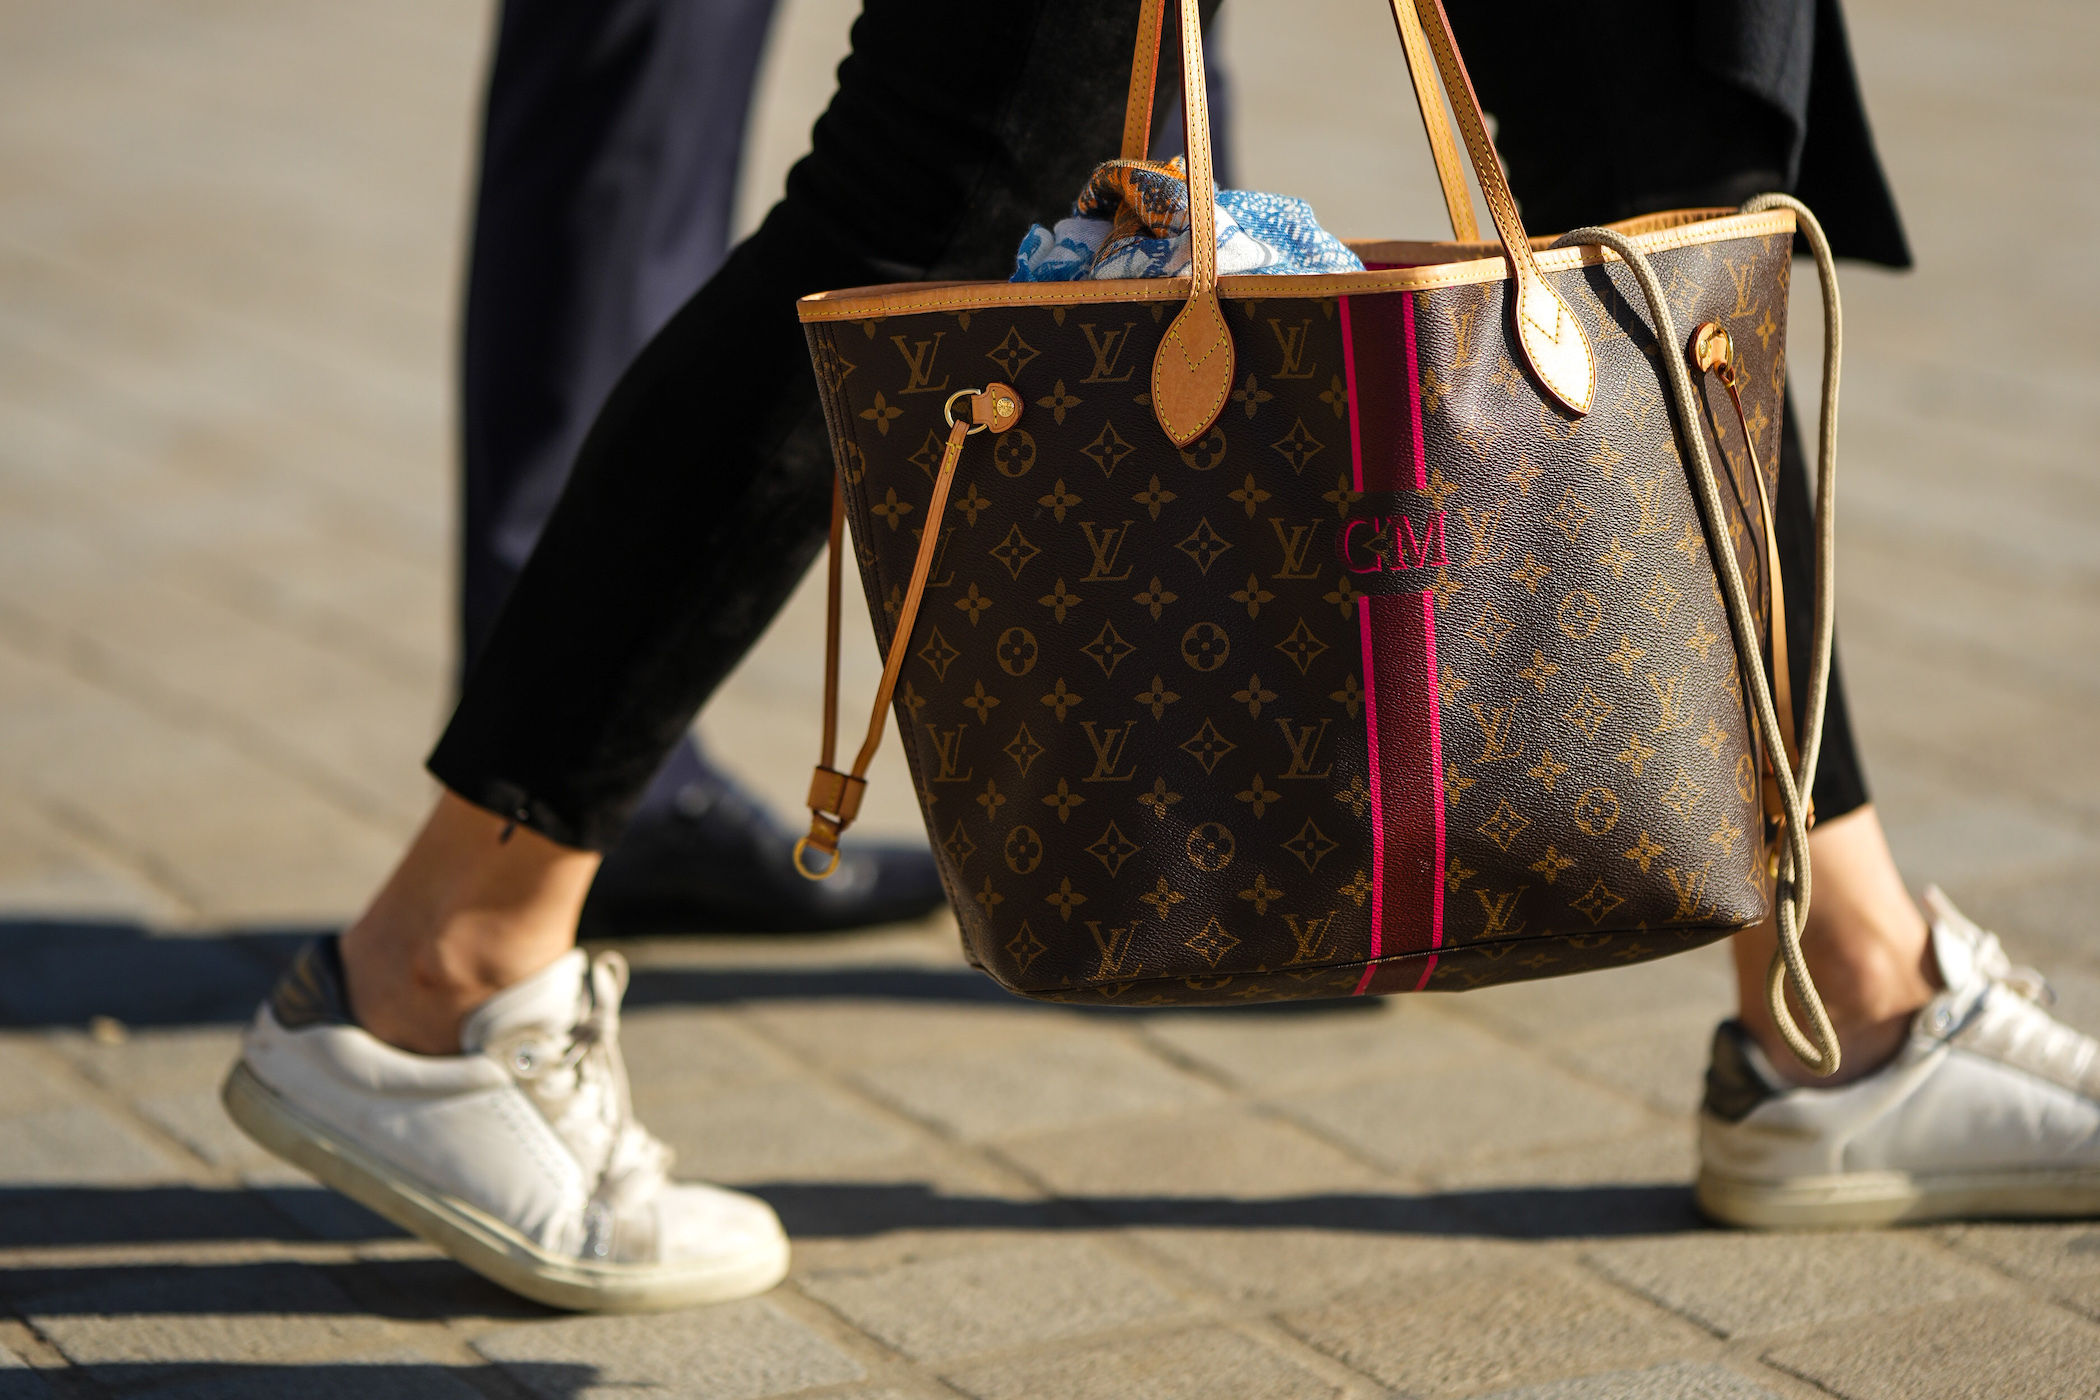 Team Picks, 6 Best Louis Vuitton Sneakers to Buy Now